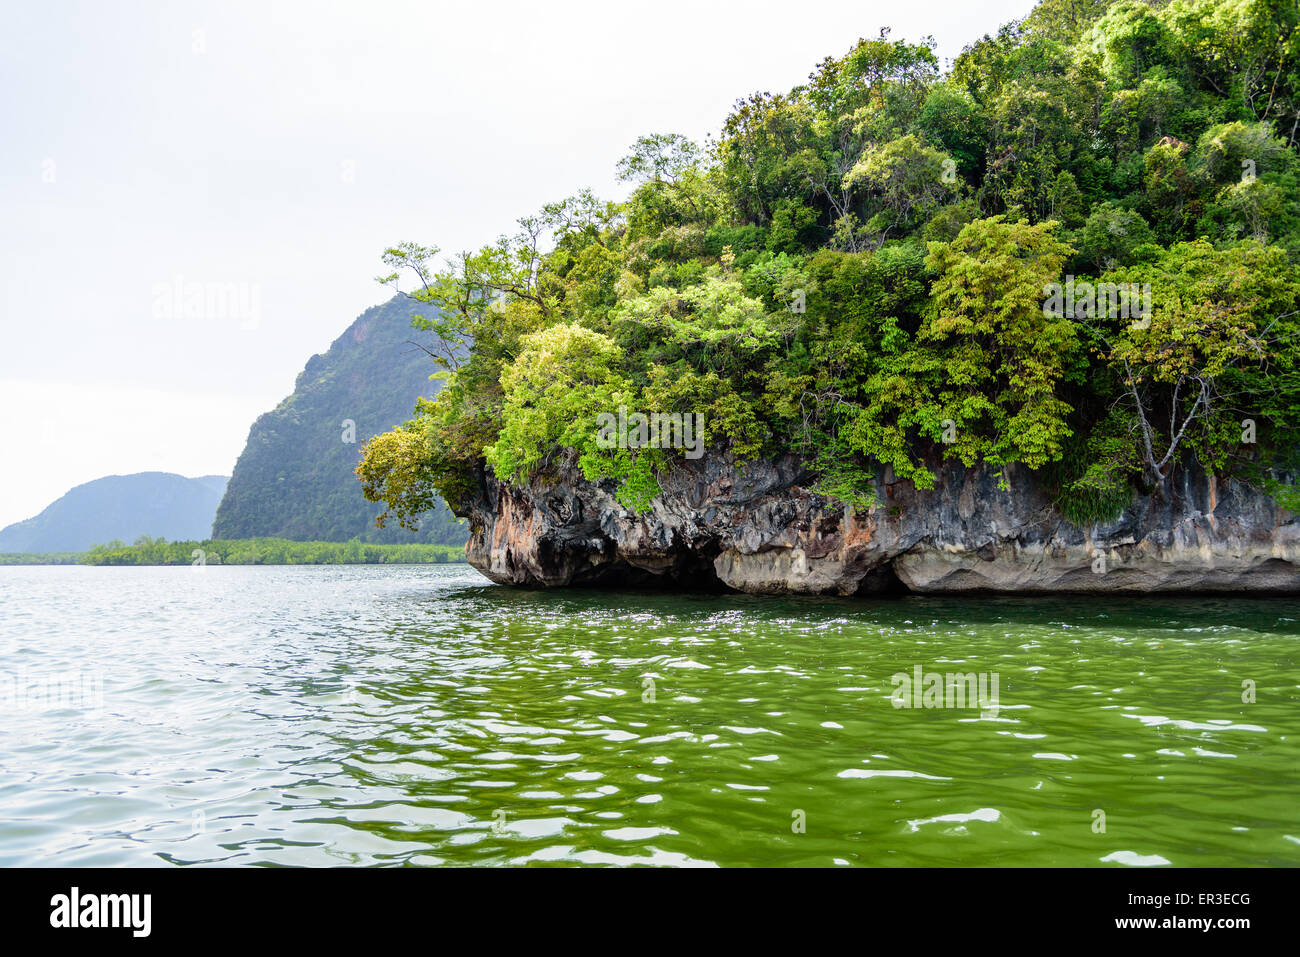 Uno splendido scenario dell'isola e del mare verde durante il viaggio in barca nella Baia di Phang Nga o Ao Phang Nga National Park, Thailandia Foto Stock